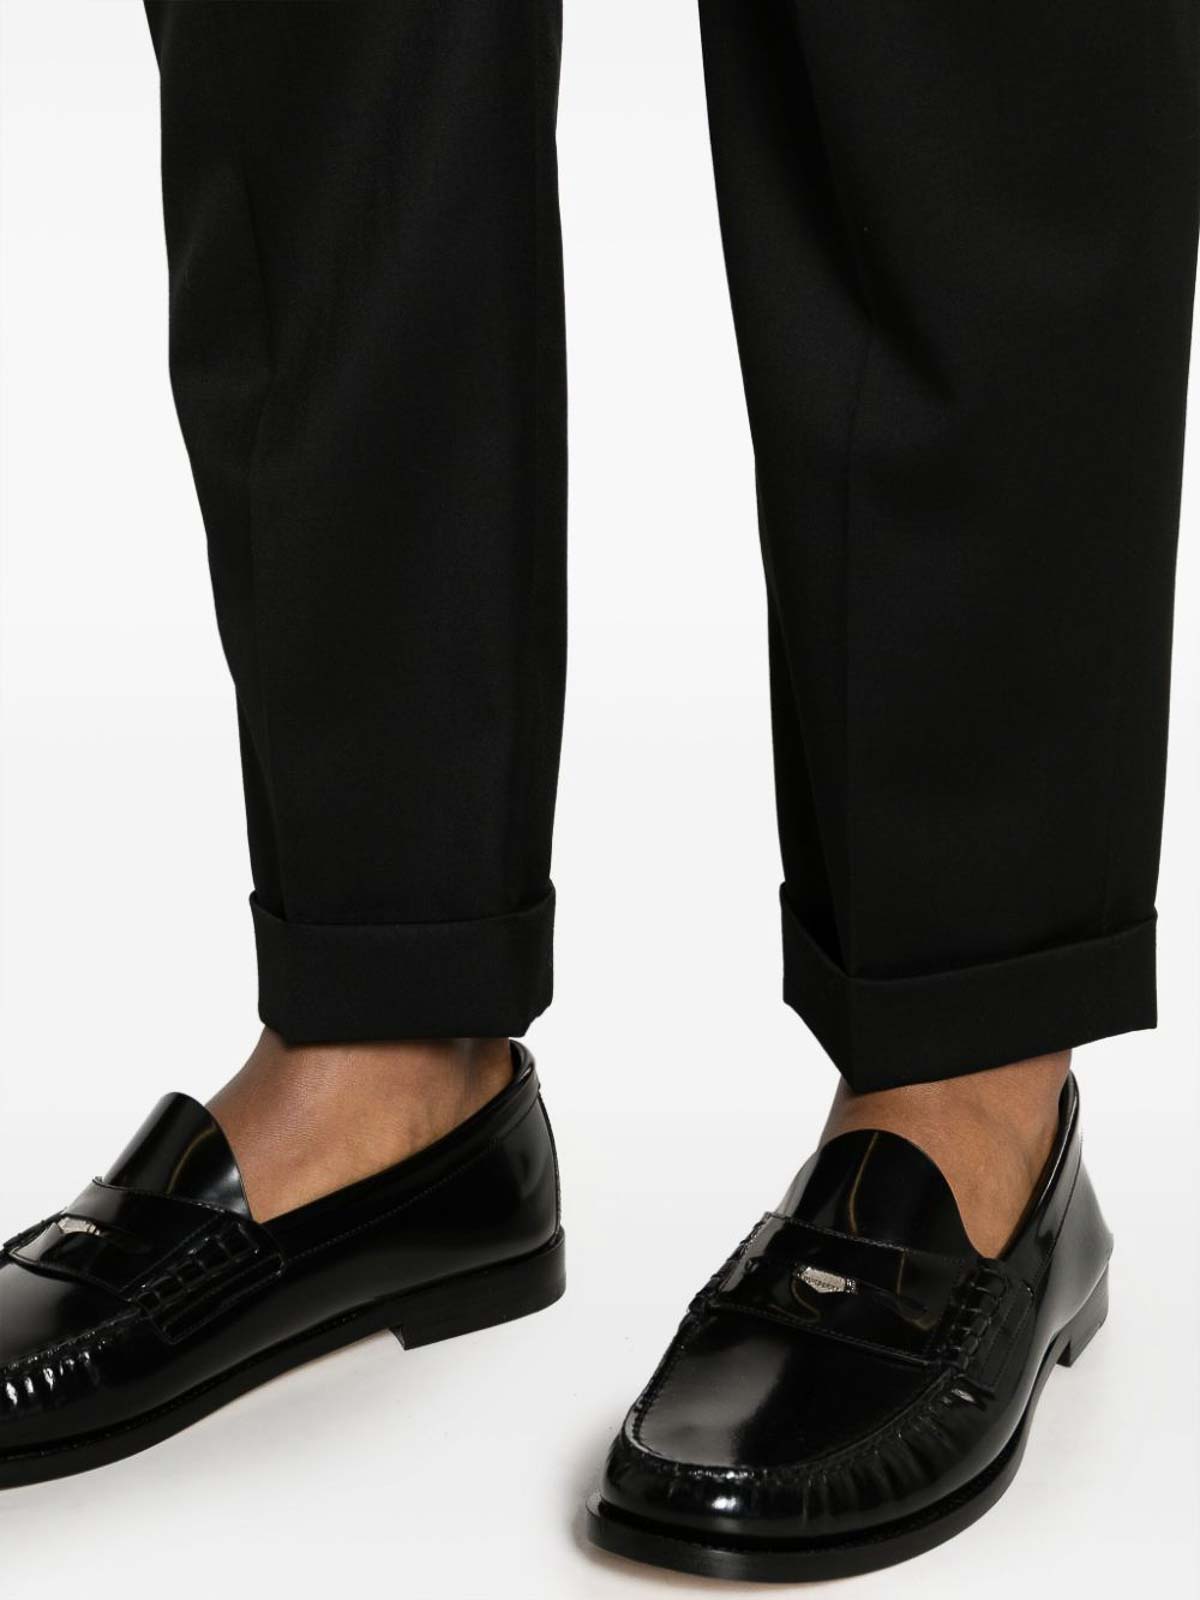 Shop Balmain Straight Trousers In Black